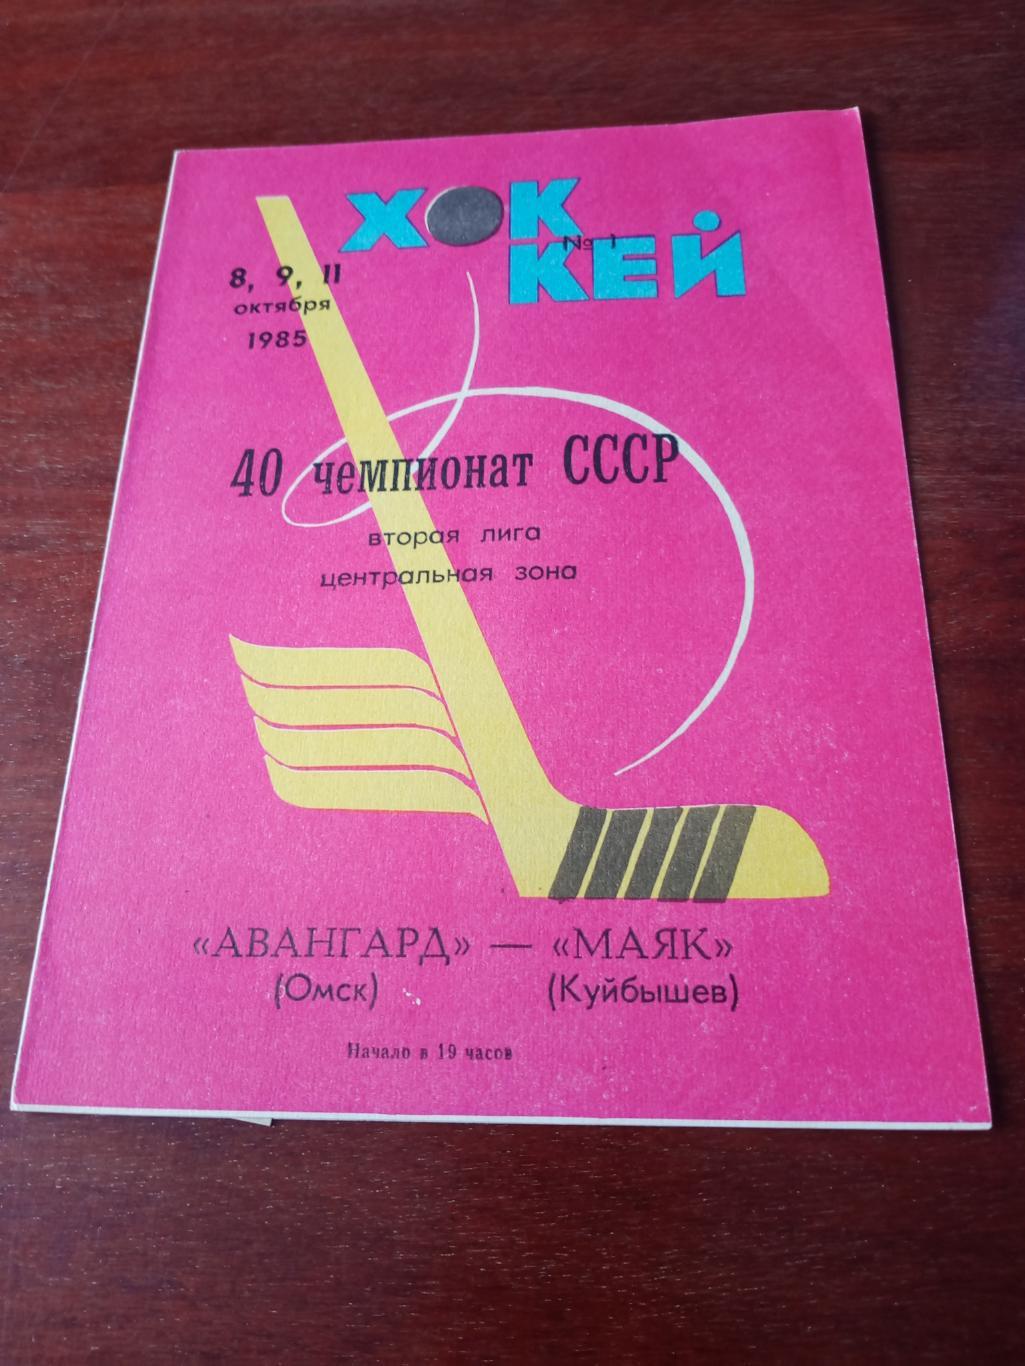 Авангард Омск - Маяк Куйбышев. 8, 9 и 11 октября 1985 год